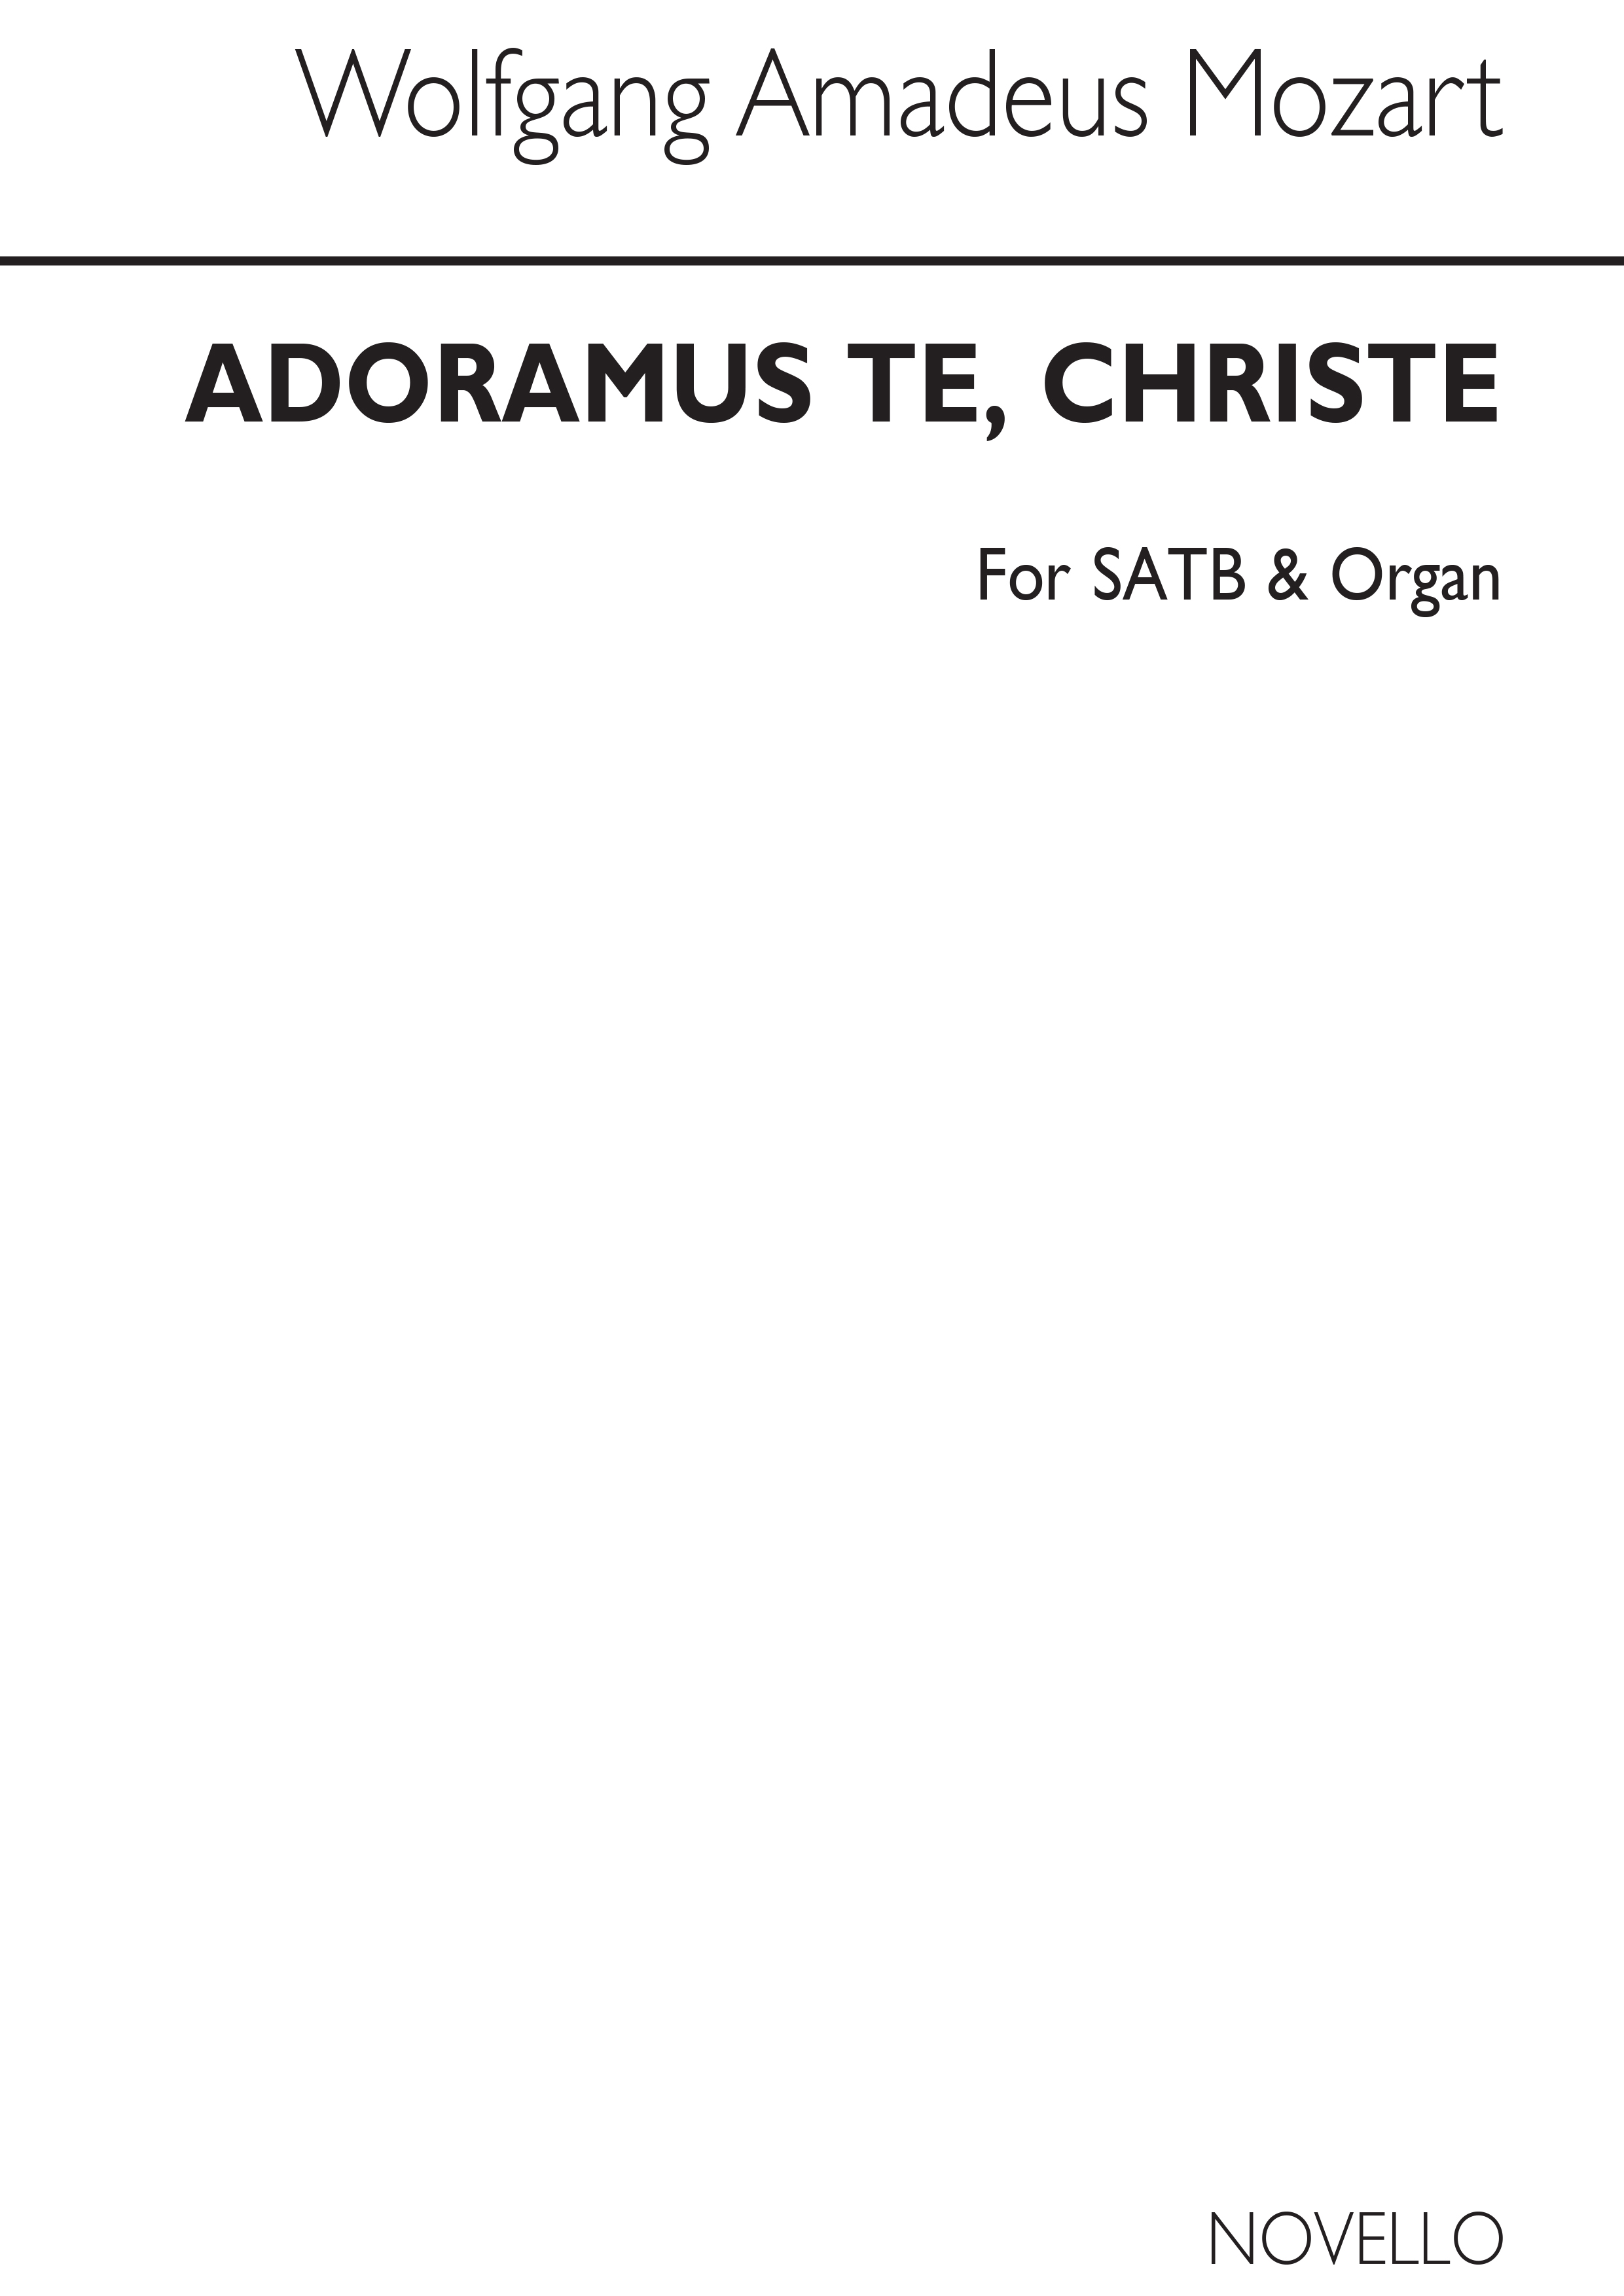 Wolfgang Amadeus Mozart: Adoramus Te (Latin): SATB: Vocal Score